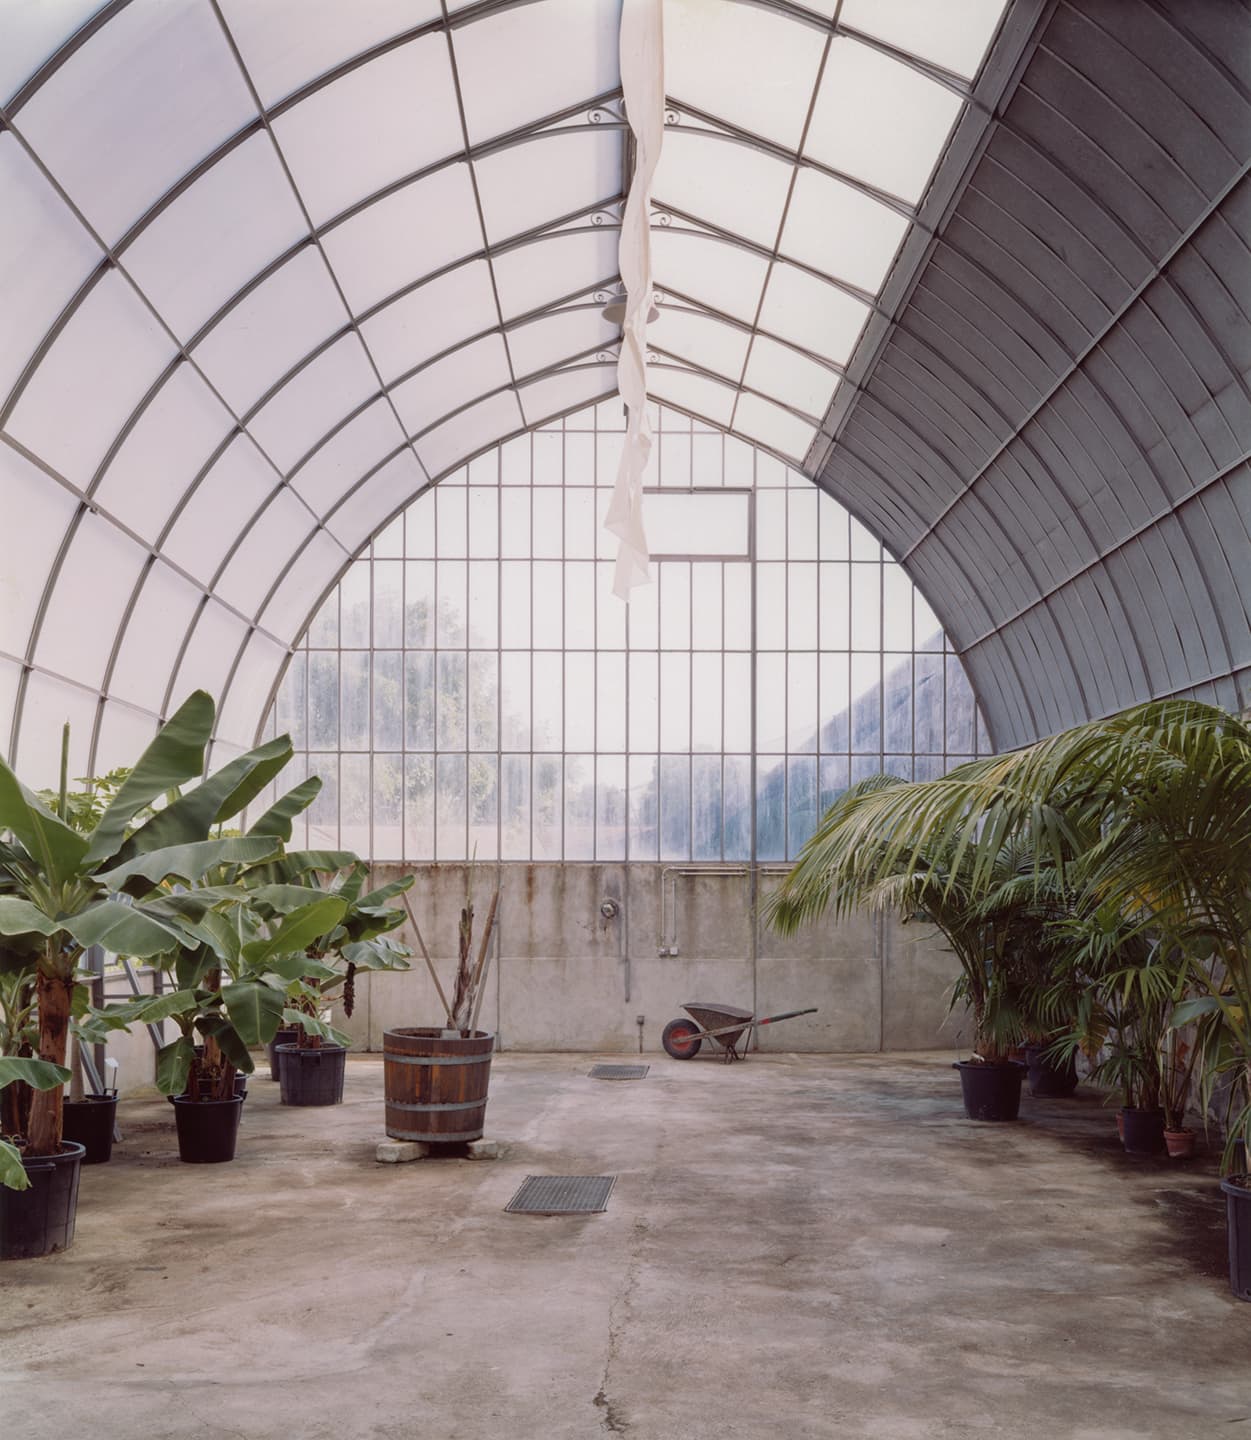 Rothchild's Greenhouse I (Geneva)